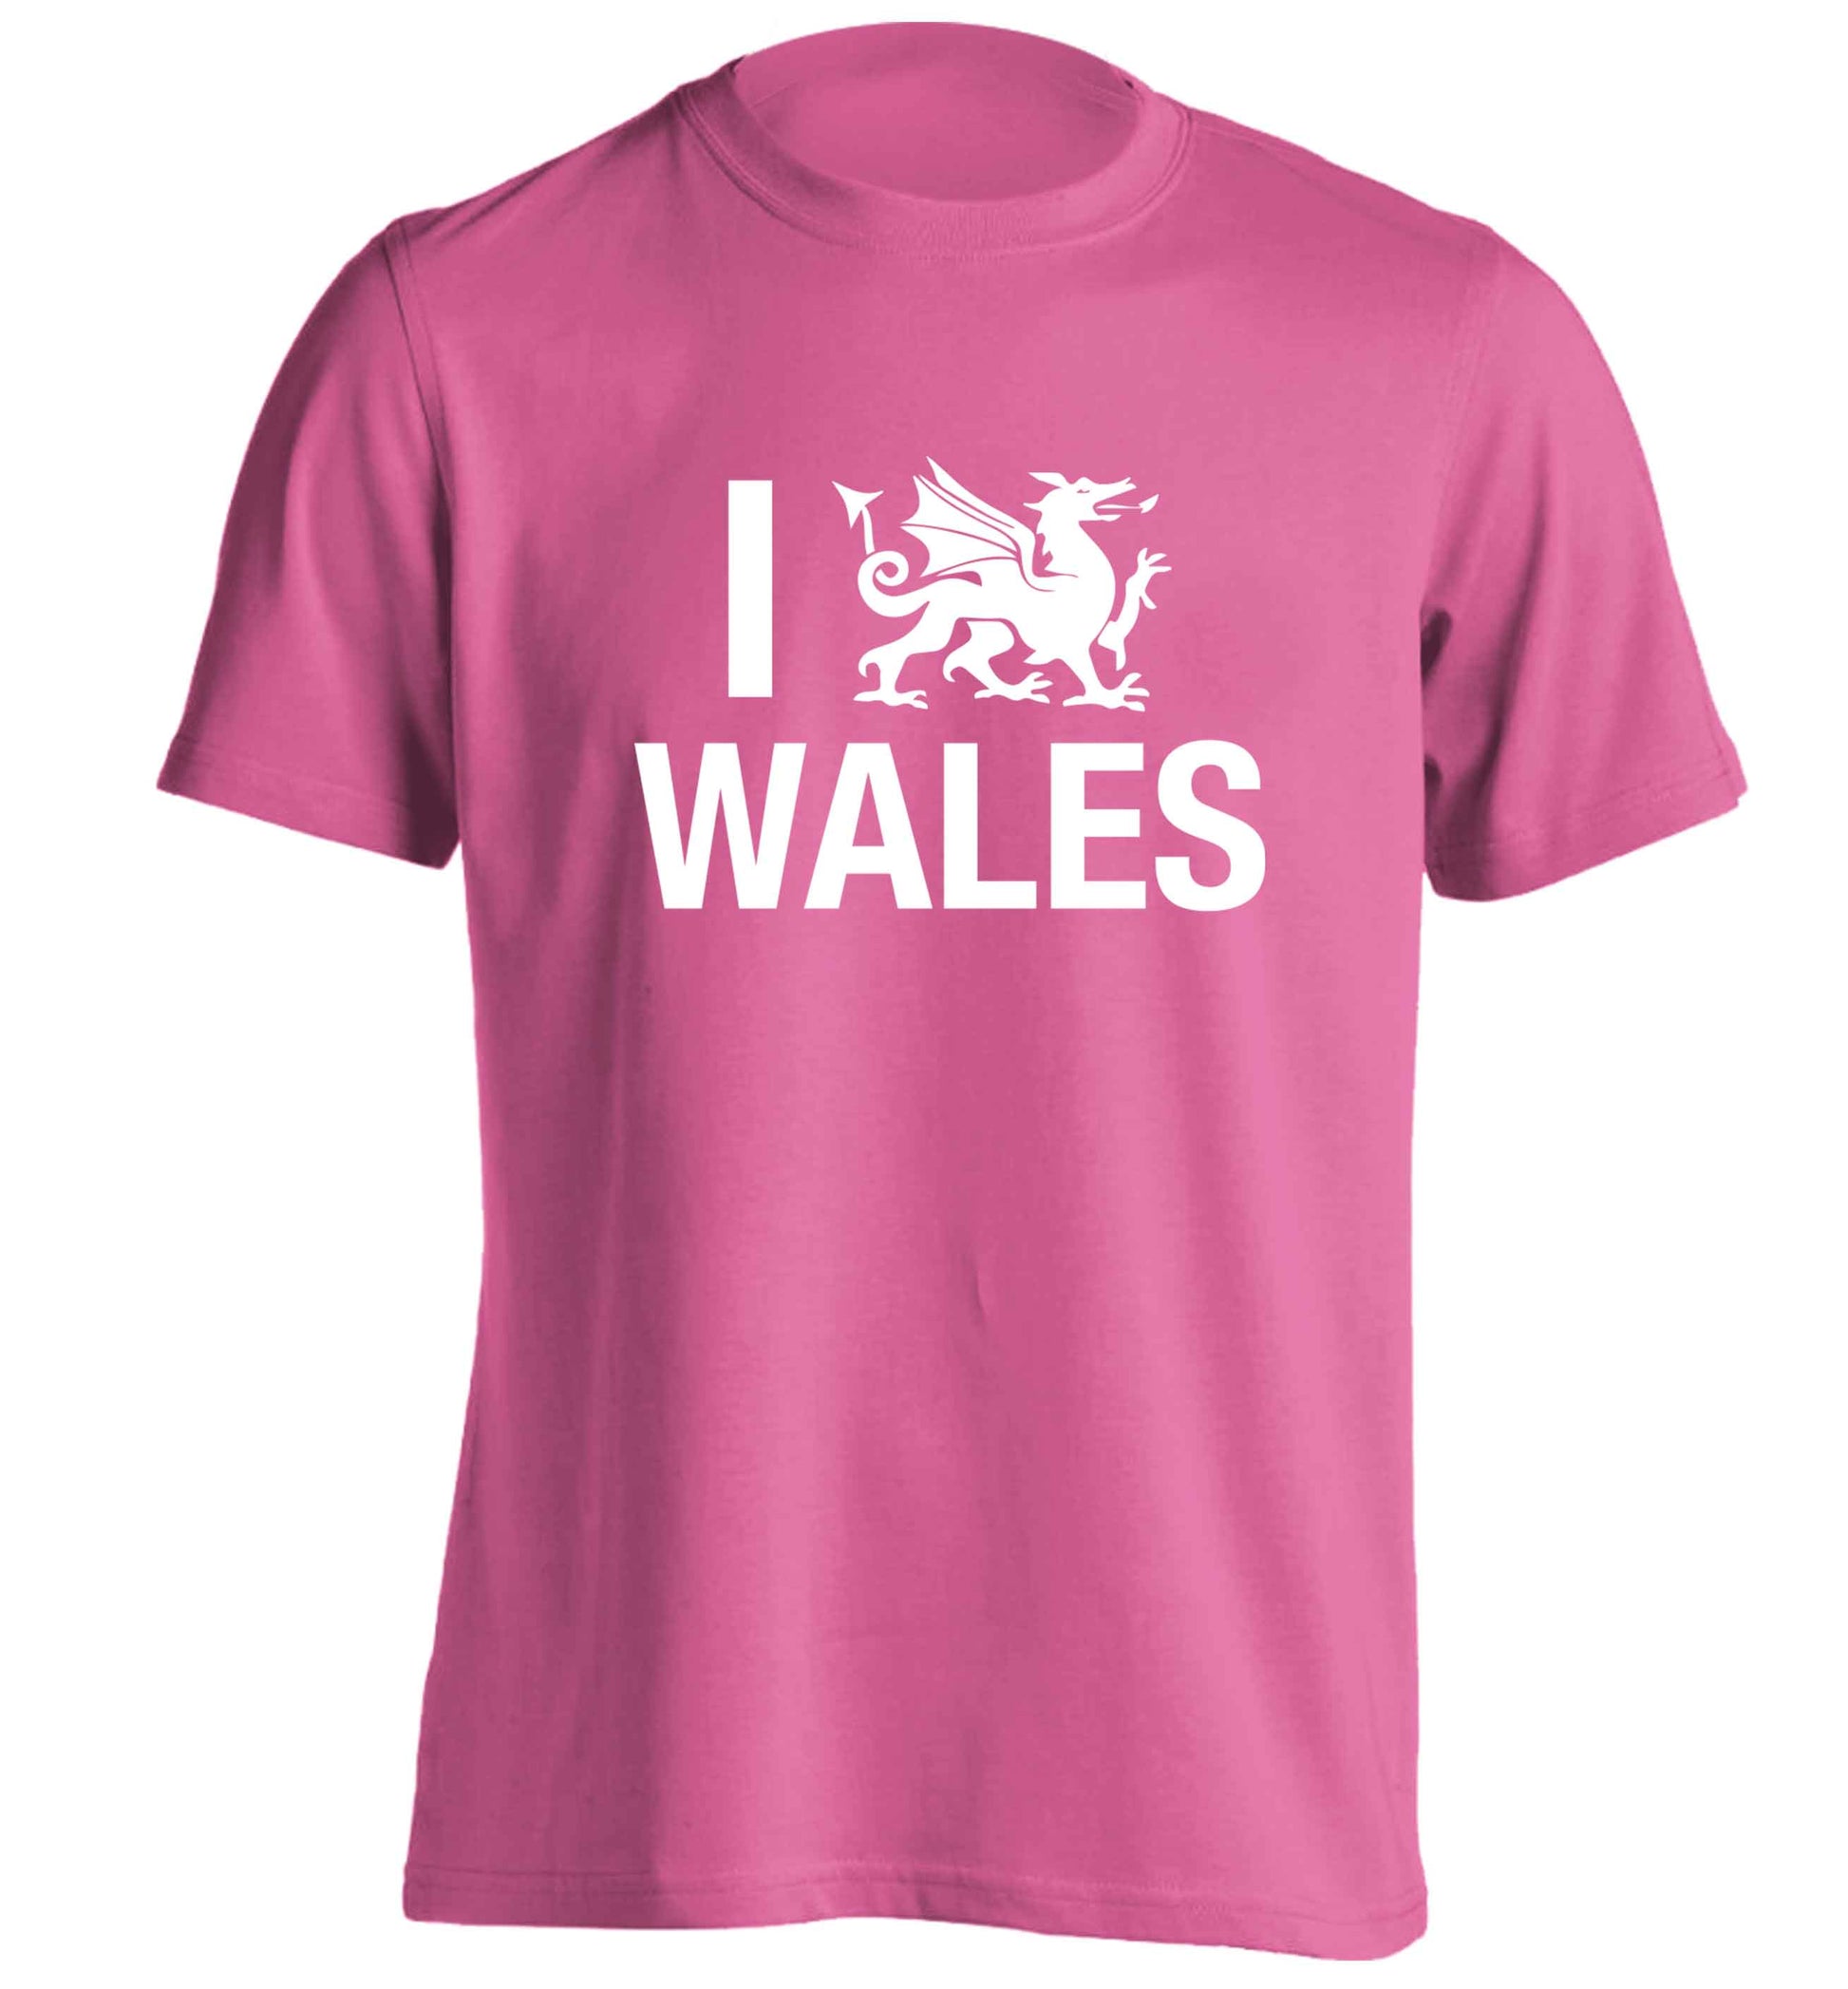 I love Wales adults unisex pink Tshirt 2XL